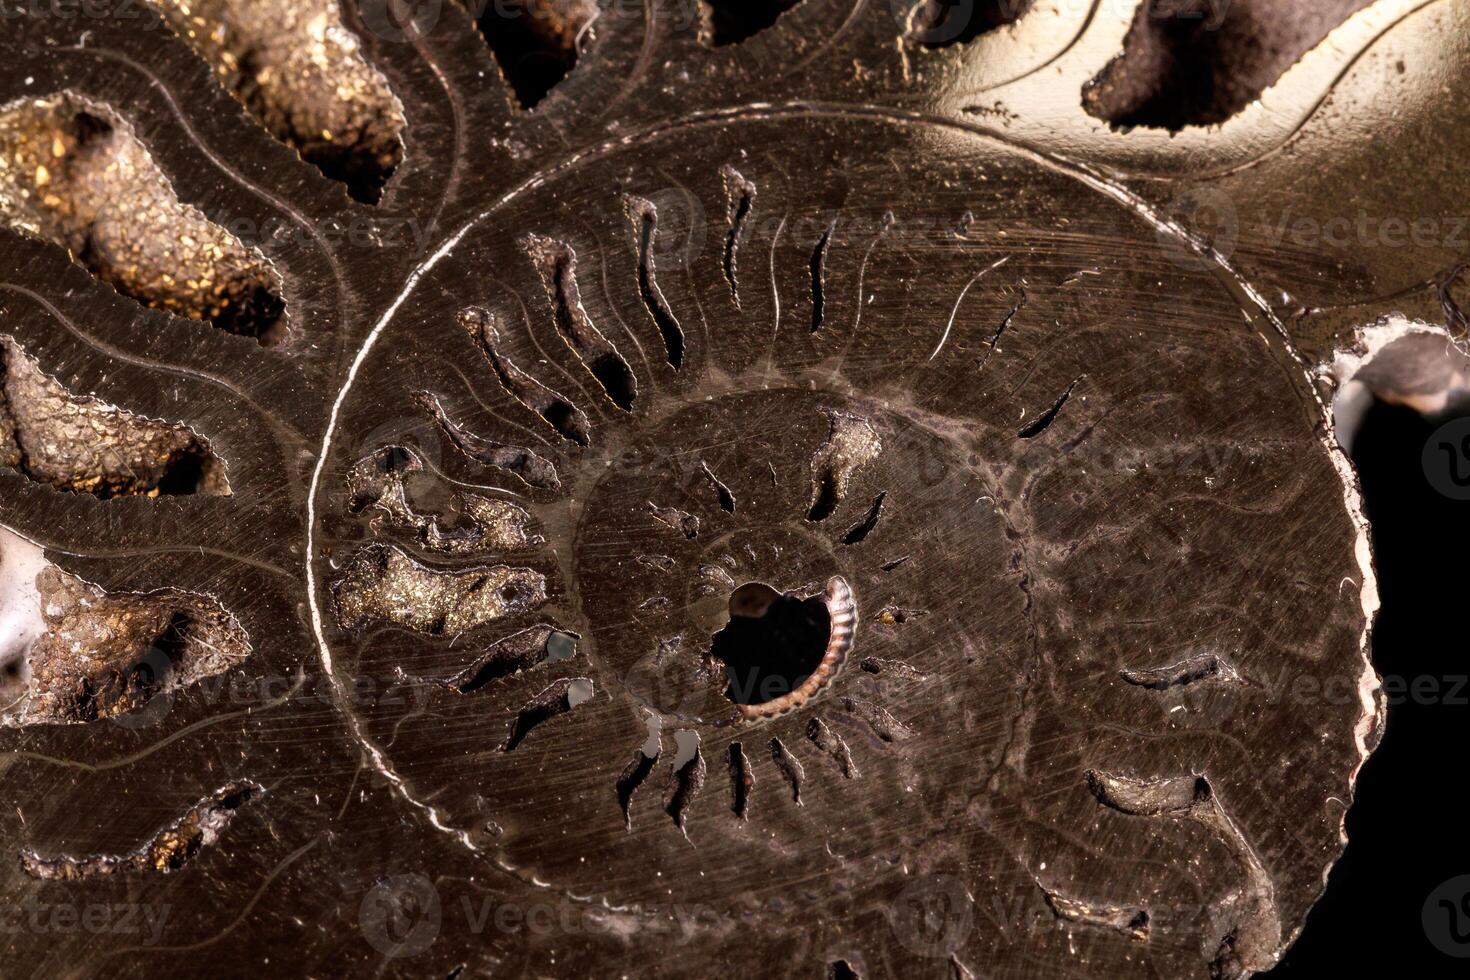 Macro mineral stone Ammonite shell on a black background photo